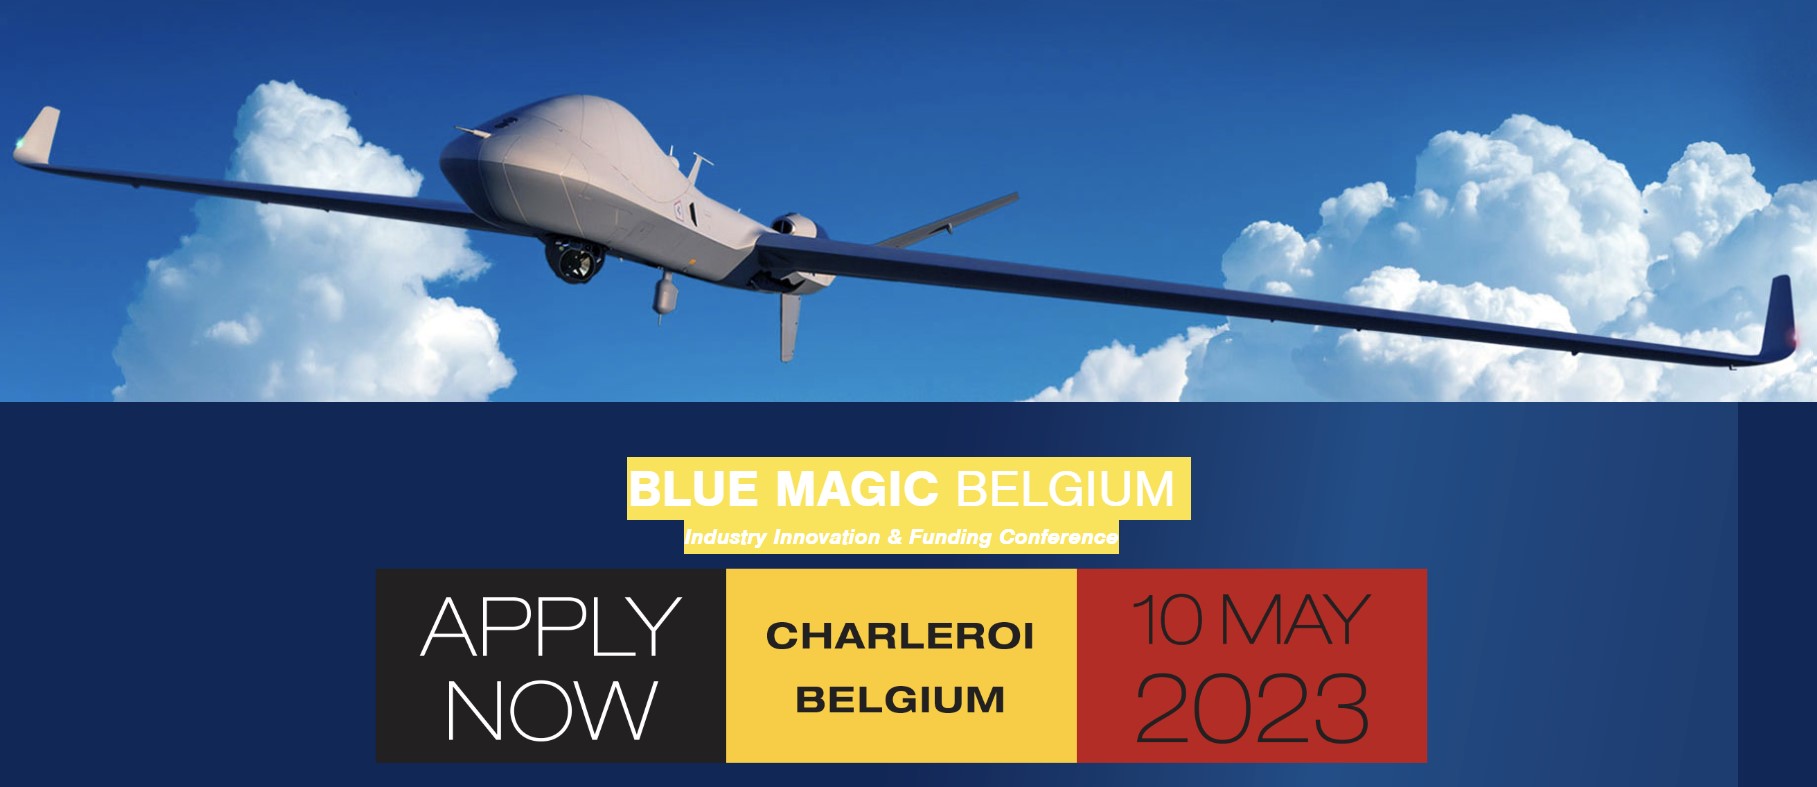 [EVENT DEFENSE - SPATIAL] Recherche de partenaires industriels - 10 mai - Charleroi A6K | "BLUE MAGIC BELGIUM"